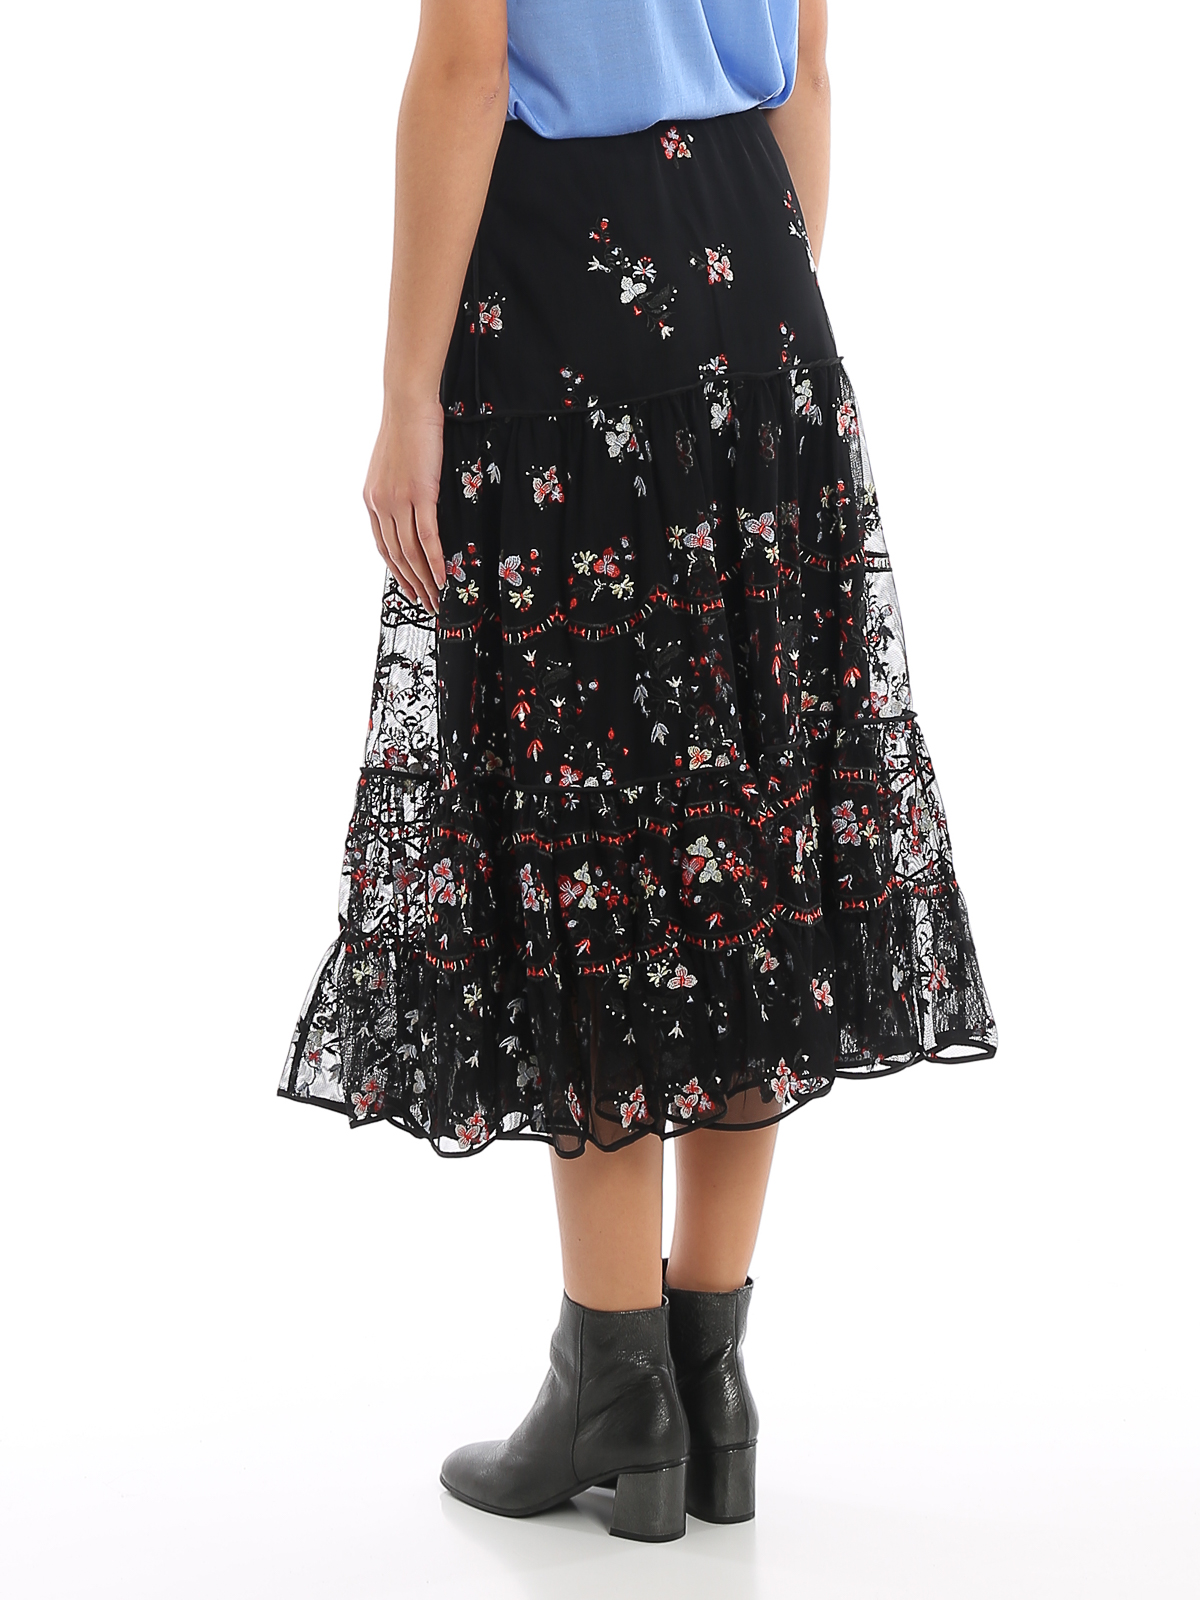 Skirts | Premium 3d Floral Pencil Skirt | Coast